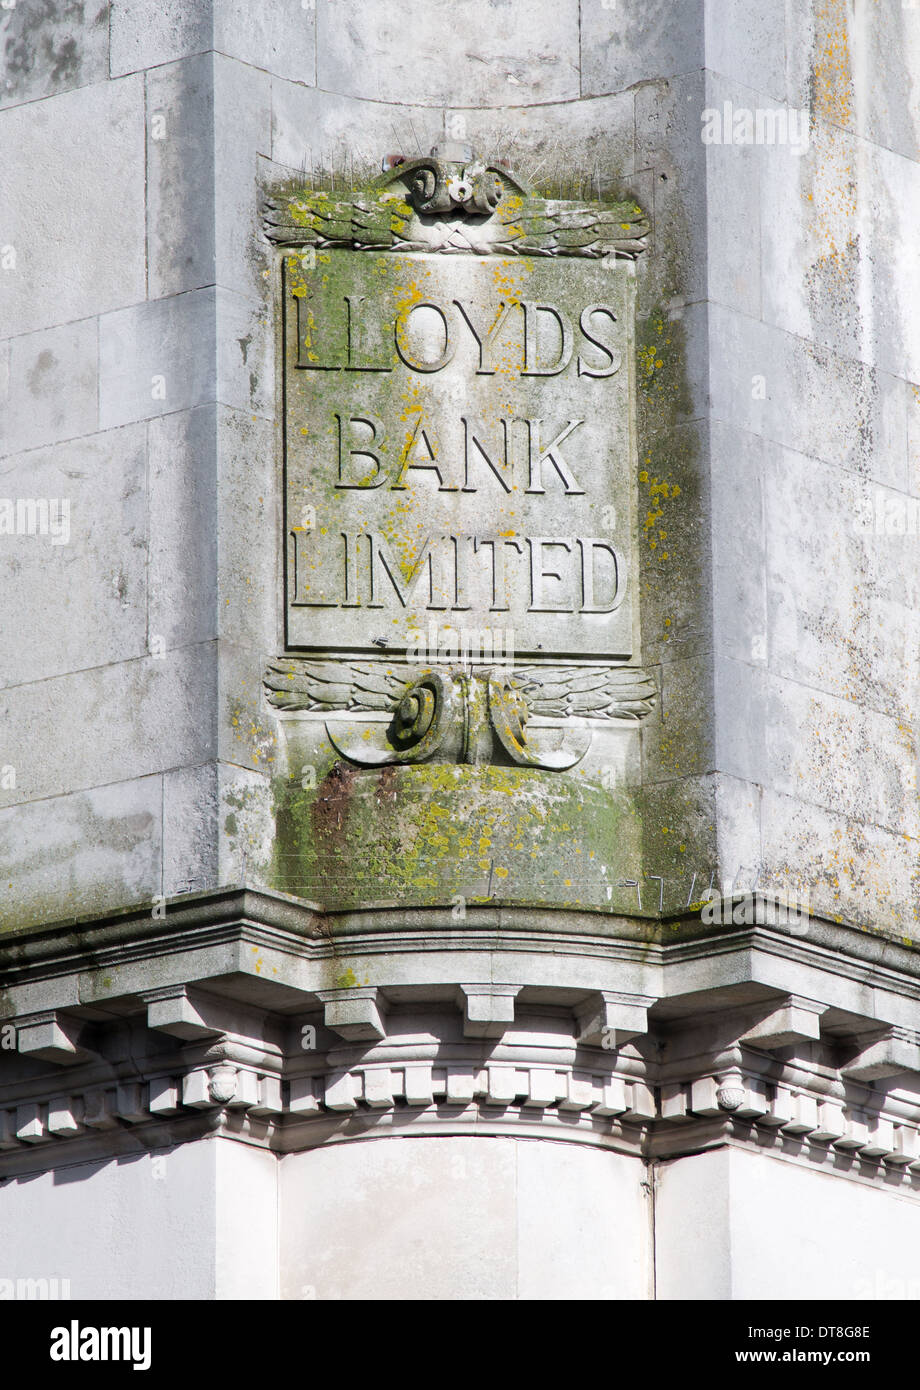 La Banque LLoyds Signer Gosport Hampshire le sud de l'Angleterre, Royaume-Uni Banque D'Images